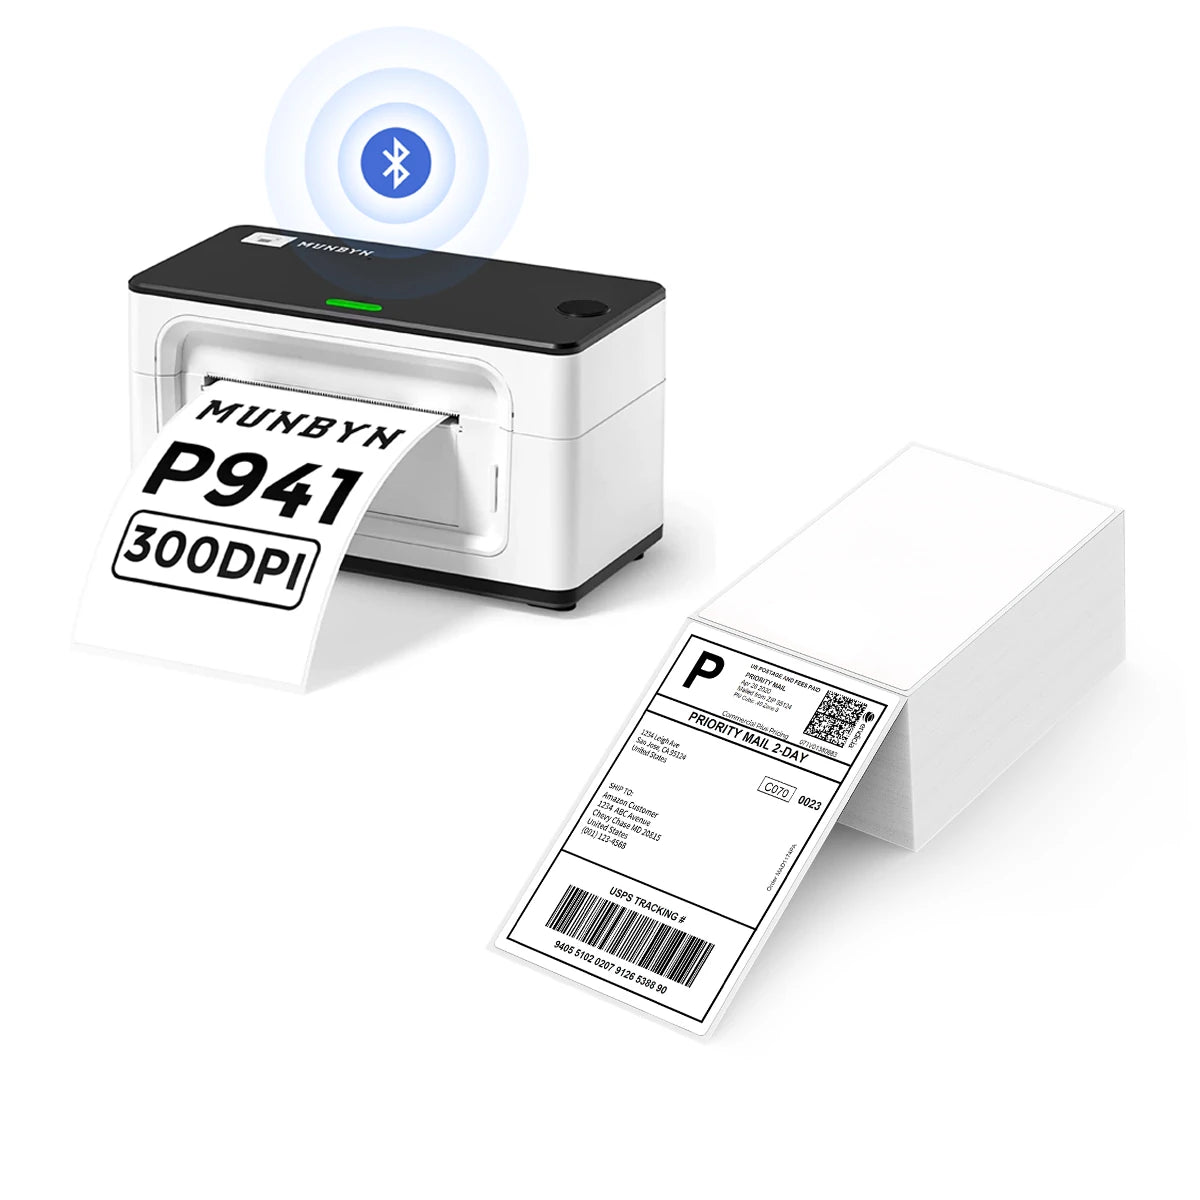 MUNBYN P941B Bluetooth Thermal Label Printer Kit includes a Bluetooth label printer and a stack of shipping labels.